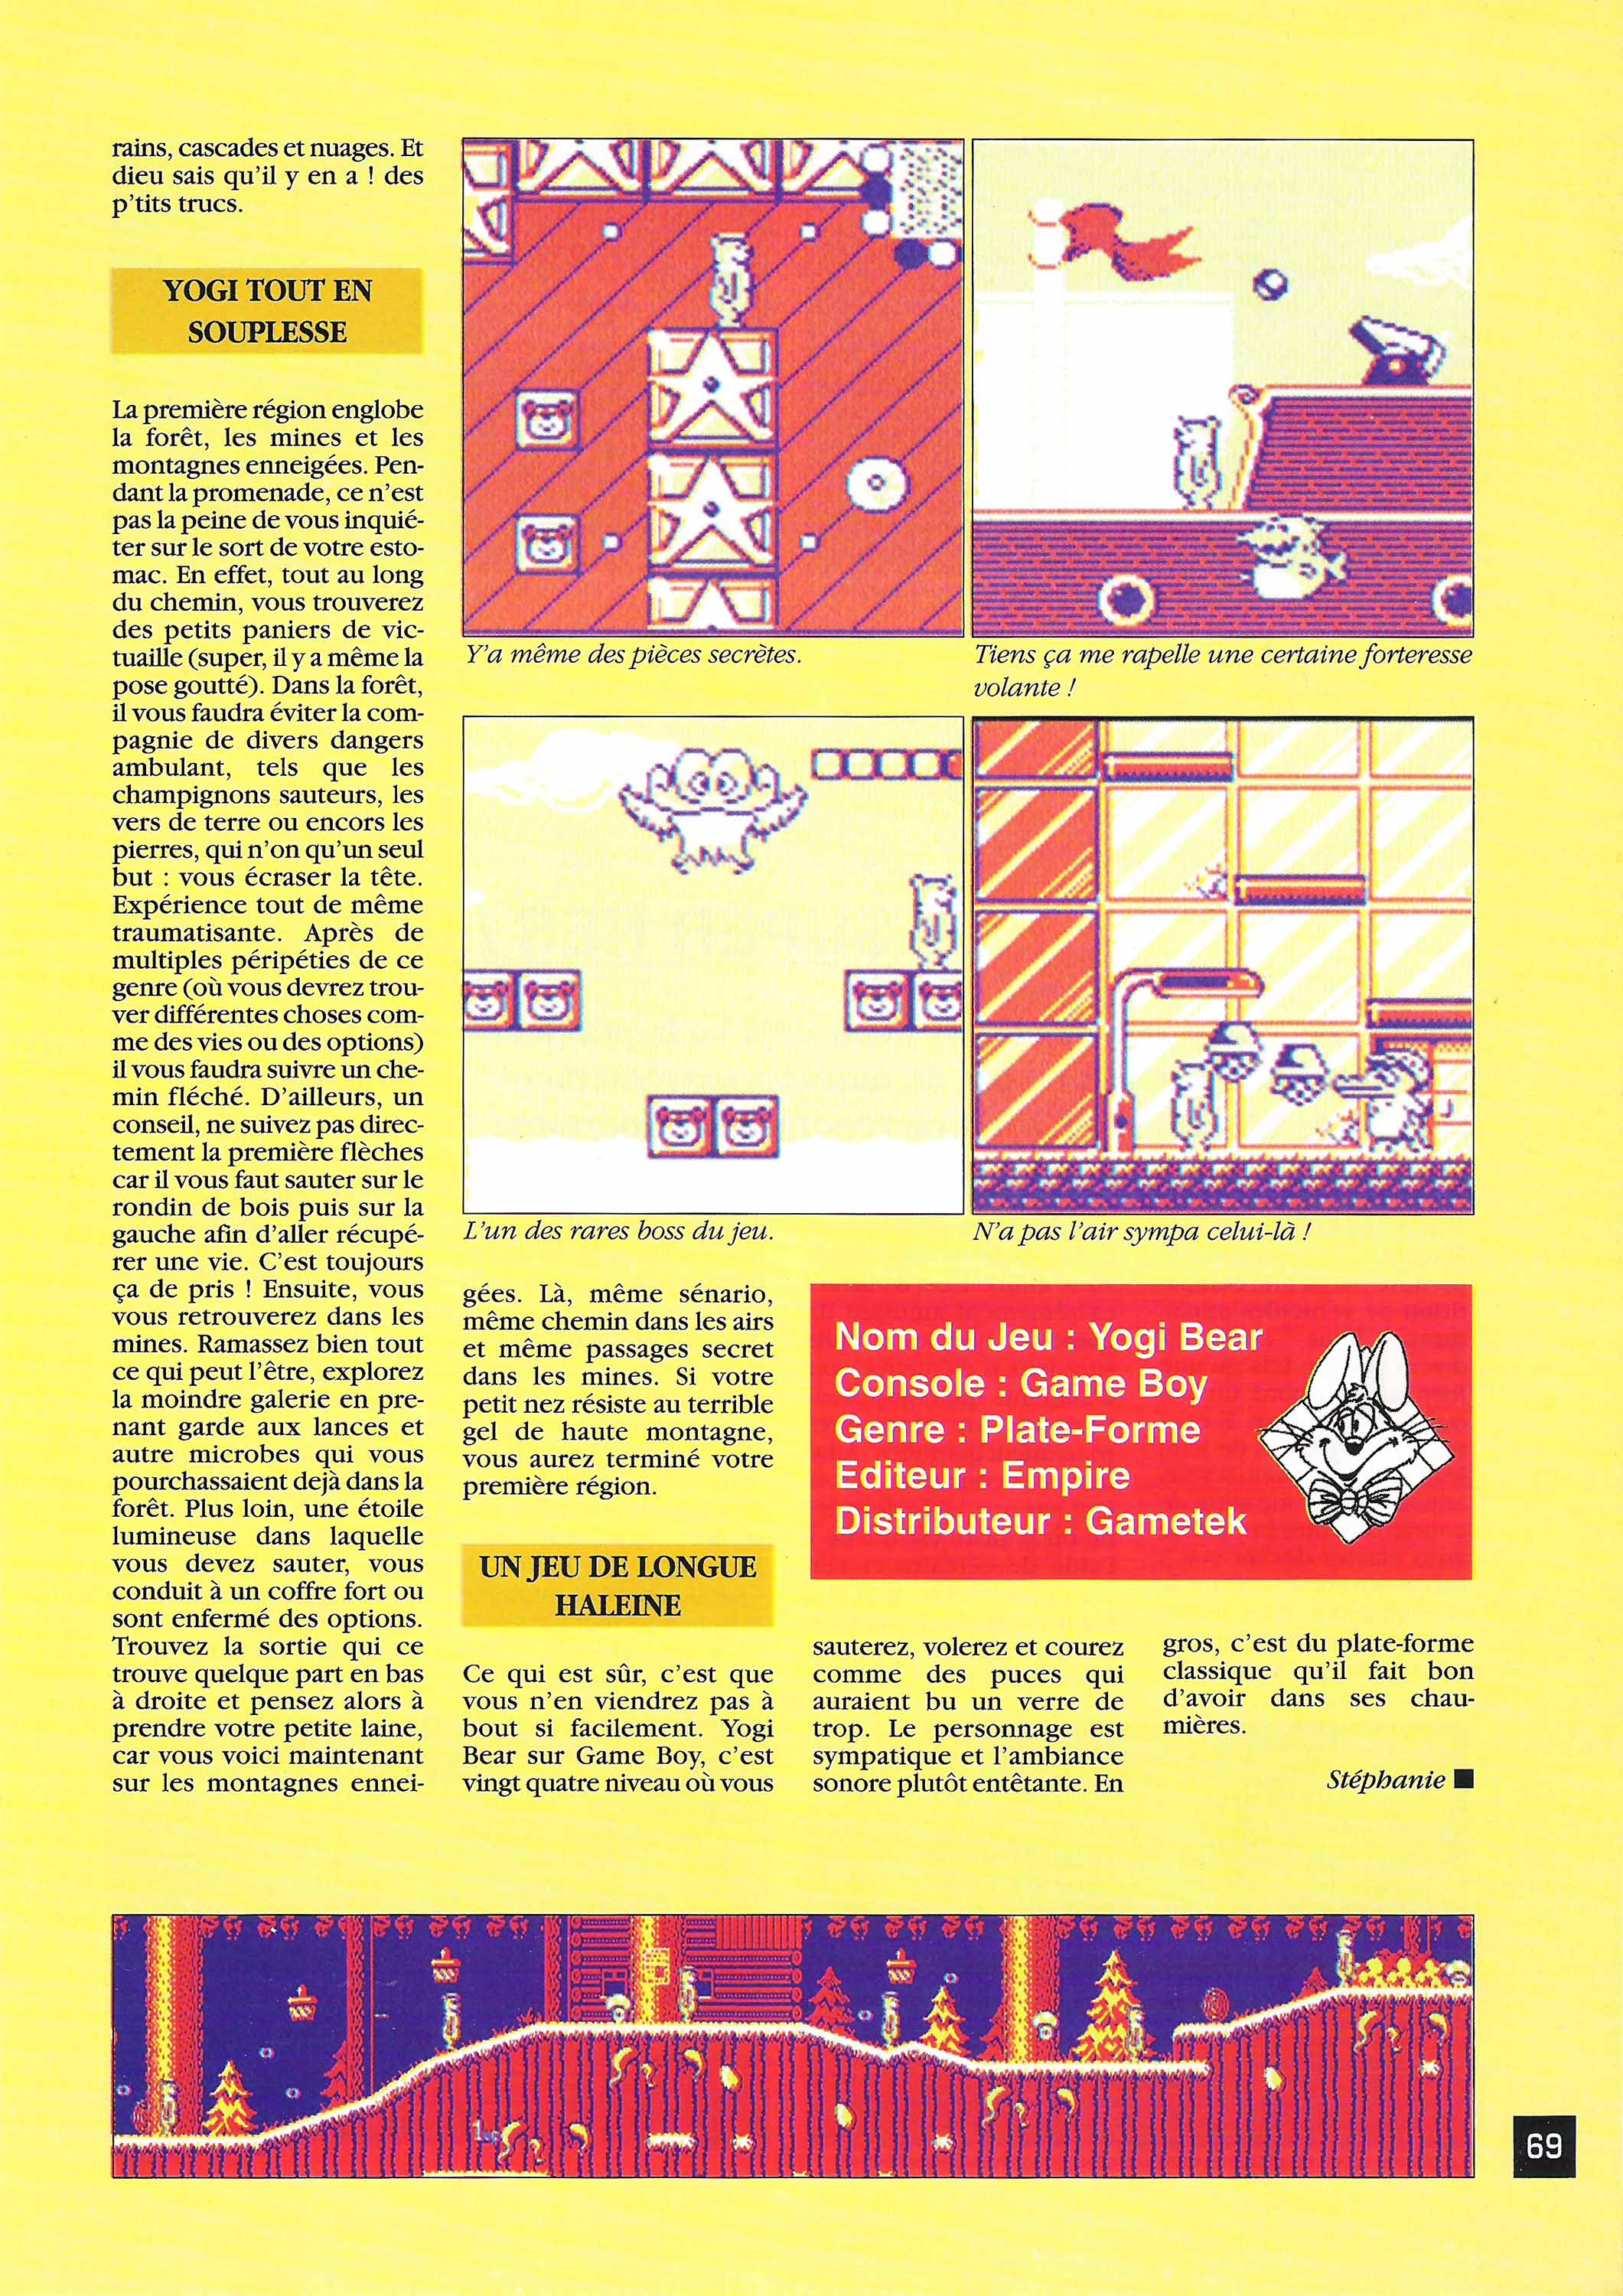 tests//1522/Micro Kids Multimedia 01 - Page 069 (1994-12).jpg